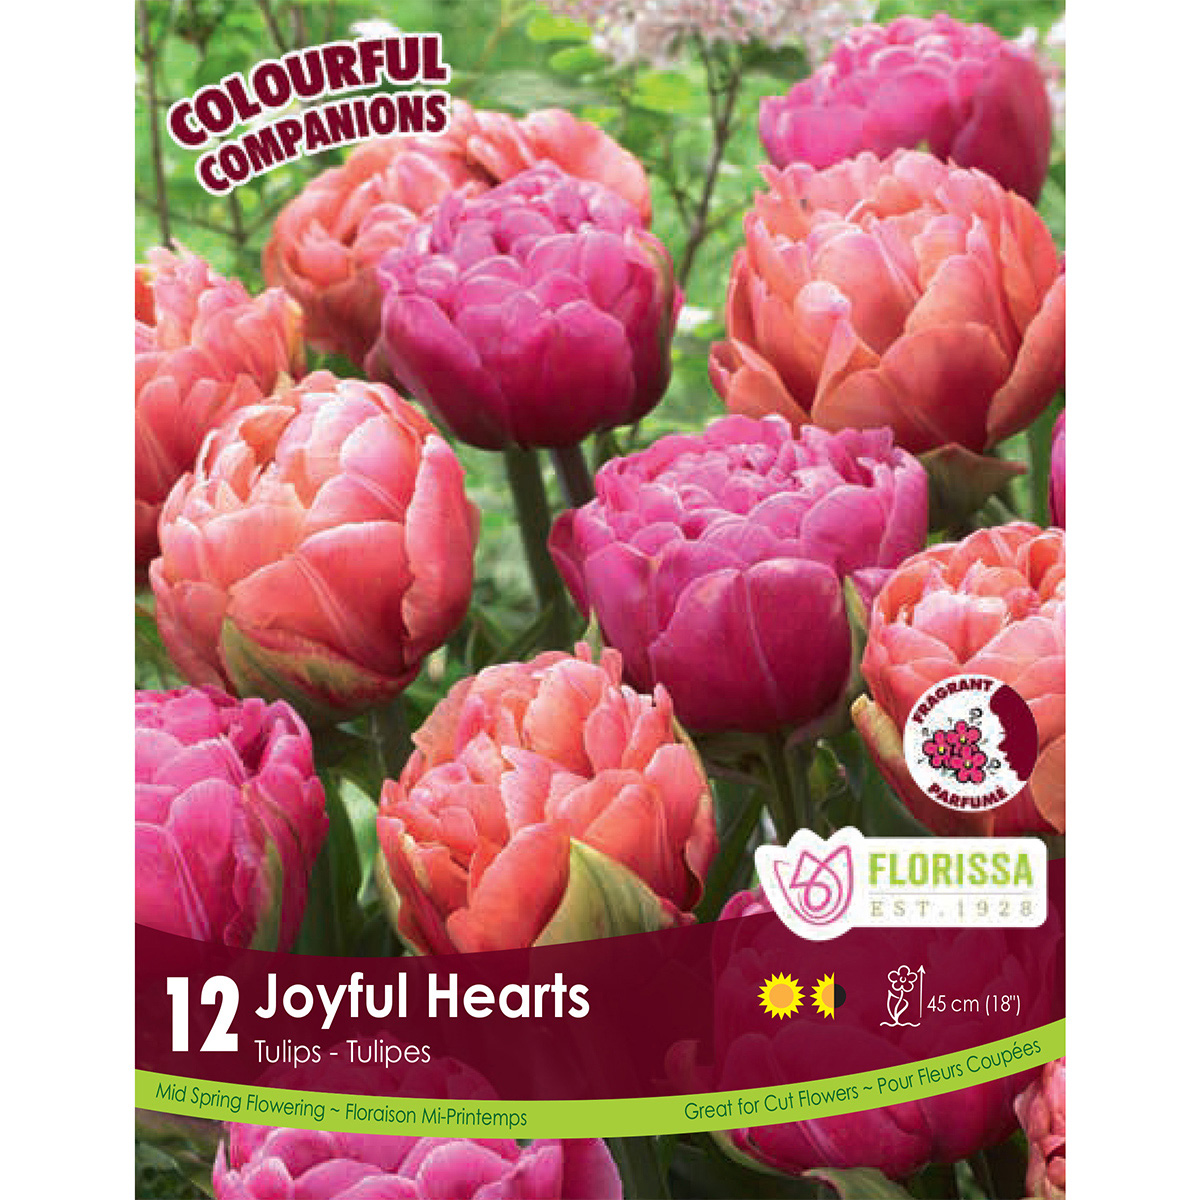 Colourful Companions Tulipa 'Joyful Hearts' Bulbs 12PK